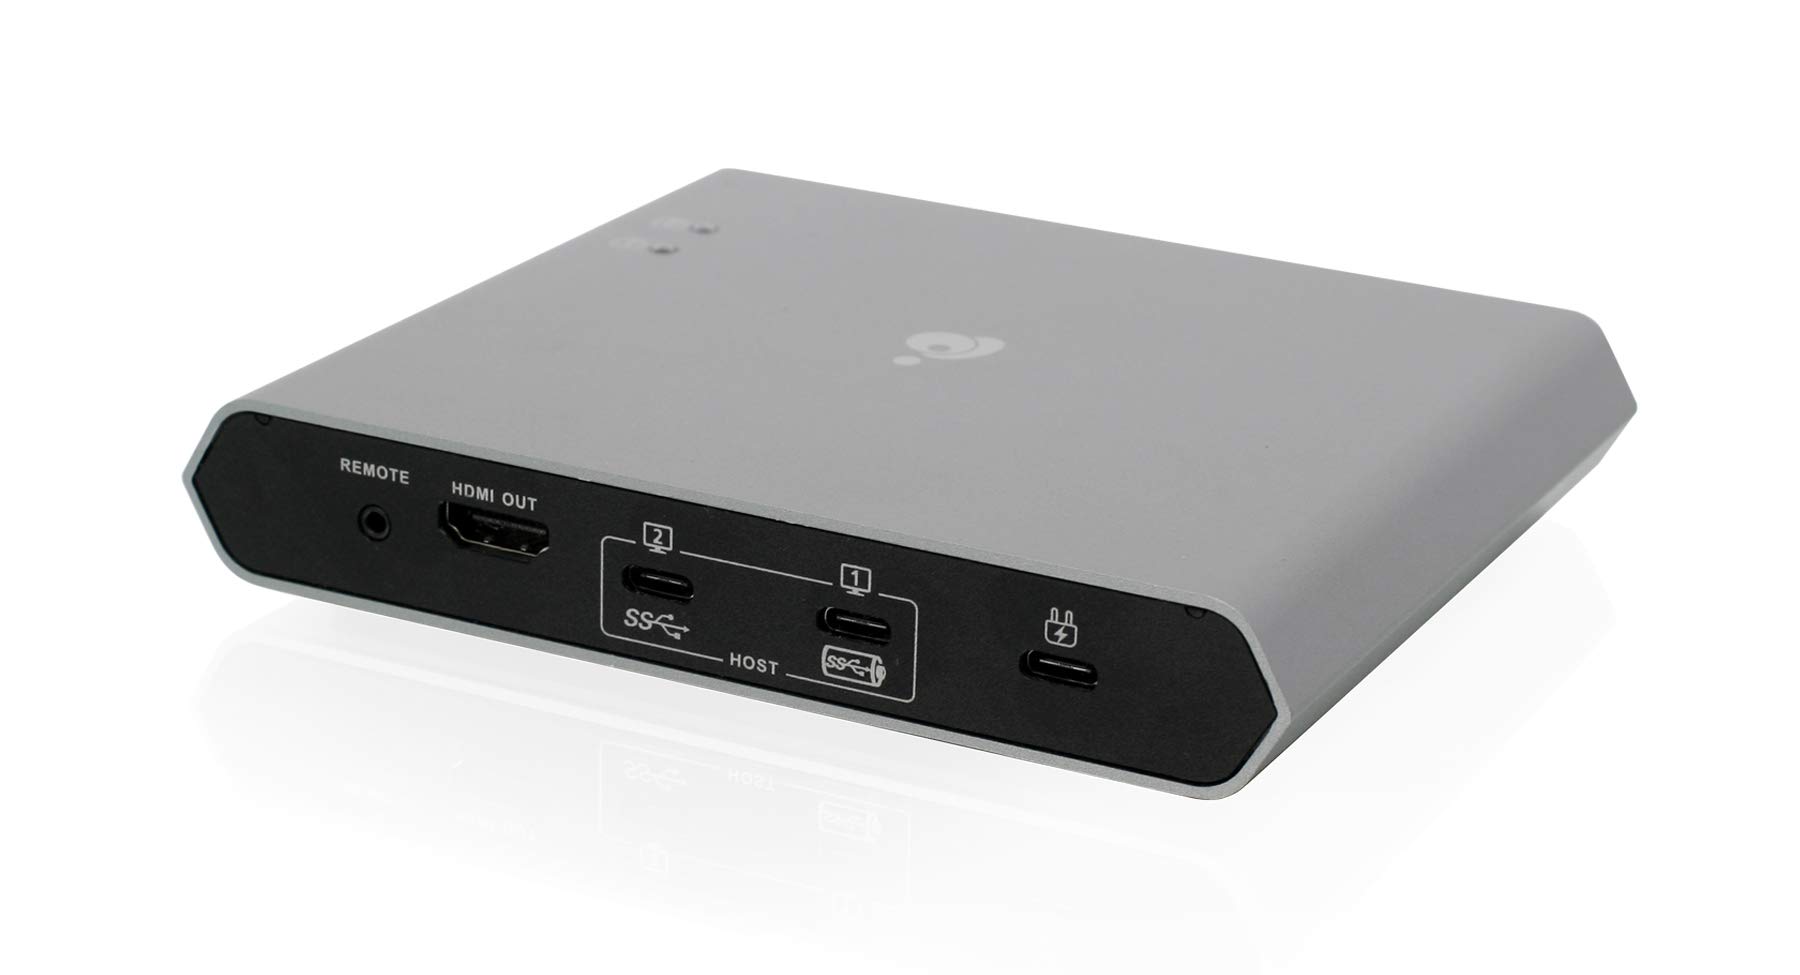 KVM 2-Port USB-C - IOGEAR 2 USB-C/Thunderbolt 3 Devices - 2 USB 3.1, Up To 5Gbps - 4k 30Hz - Power Delivery 75W - Plug n Play - TAA - Mac/Win - GUD3C04